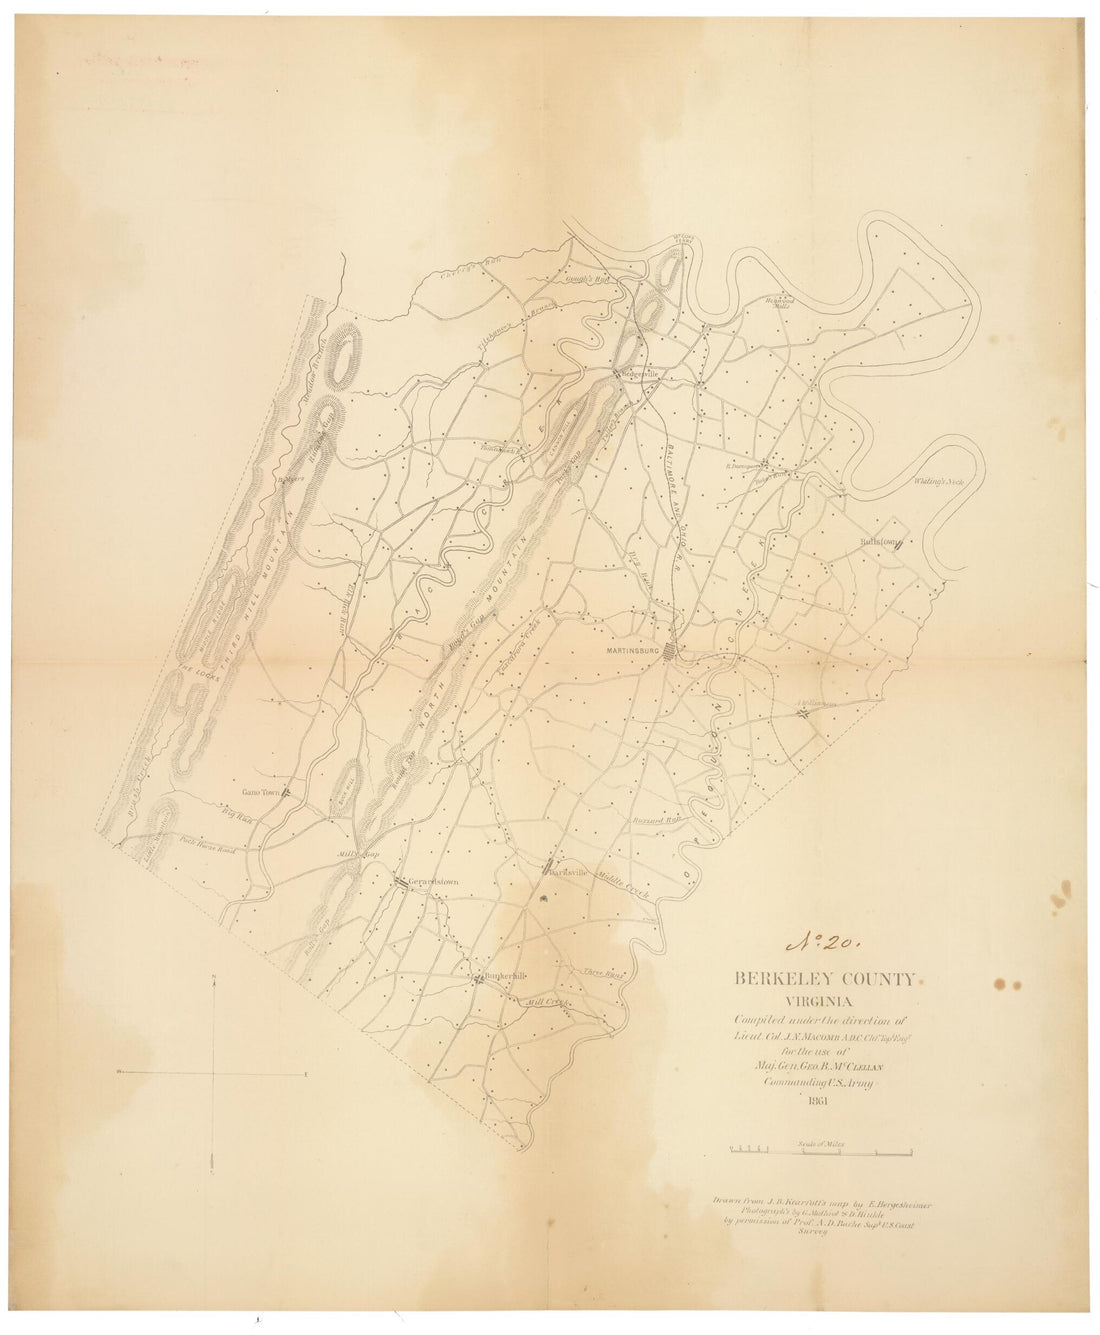 This old map of Berkeley County, Virginia from 1861 was created by E. (Edwin) Hergesheimer, D. Hinkle, J. Baker Kearfott, J. N. (John N.) Macomb, G. Mathiot in 1861